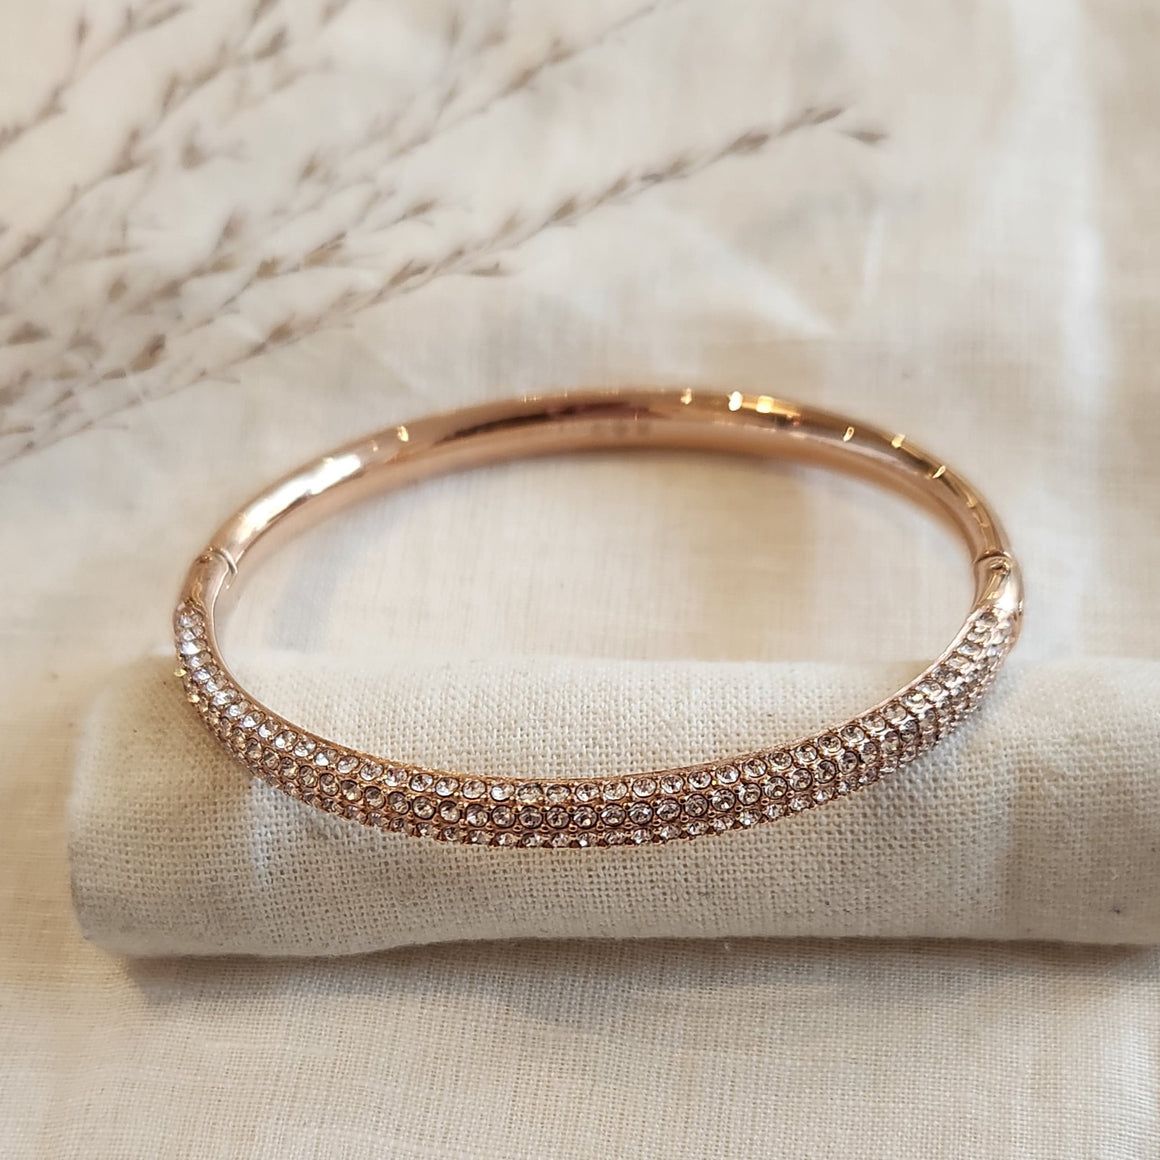 Swarovski crystal hinged bangle bracelet